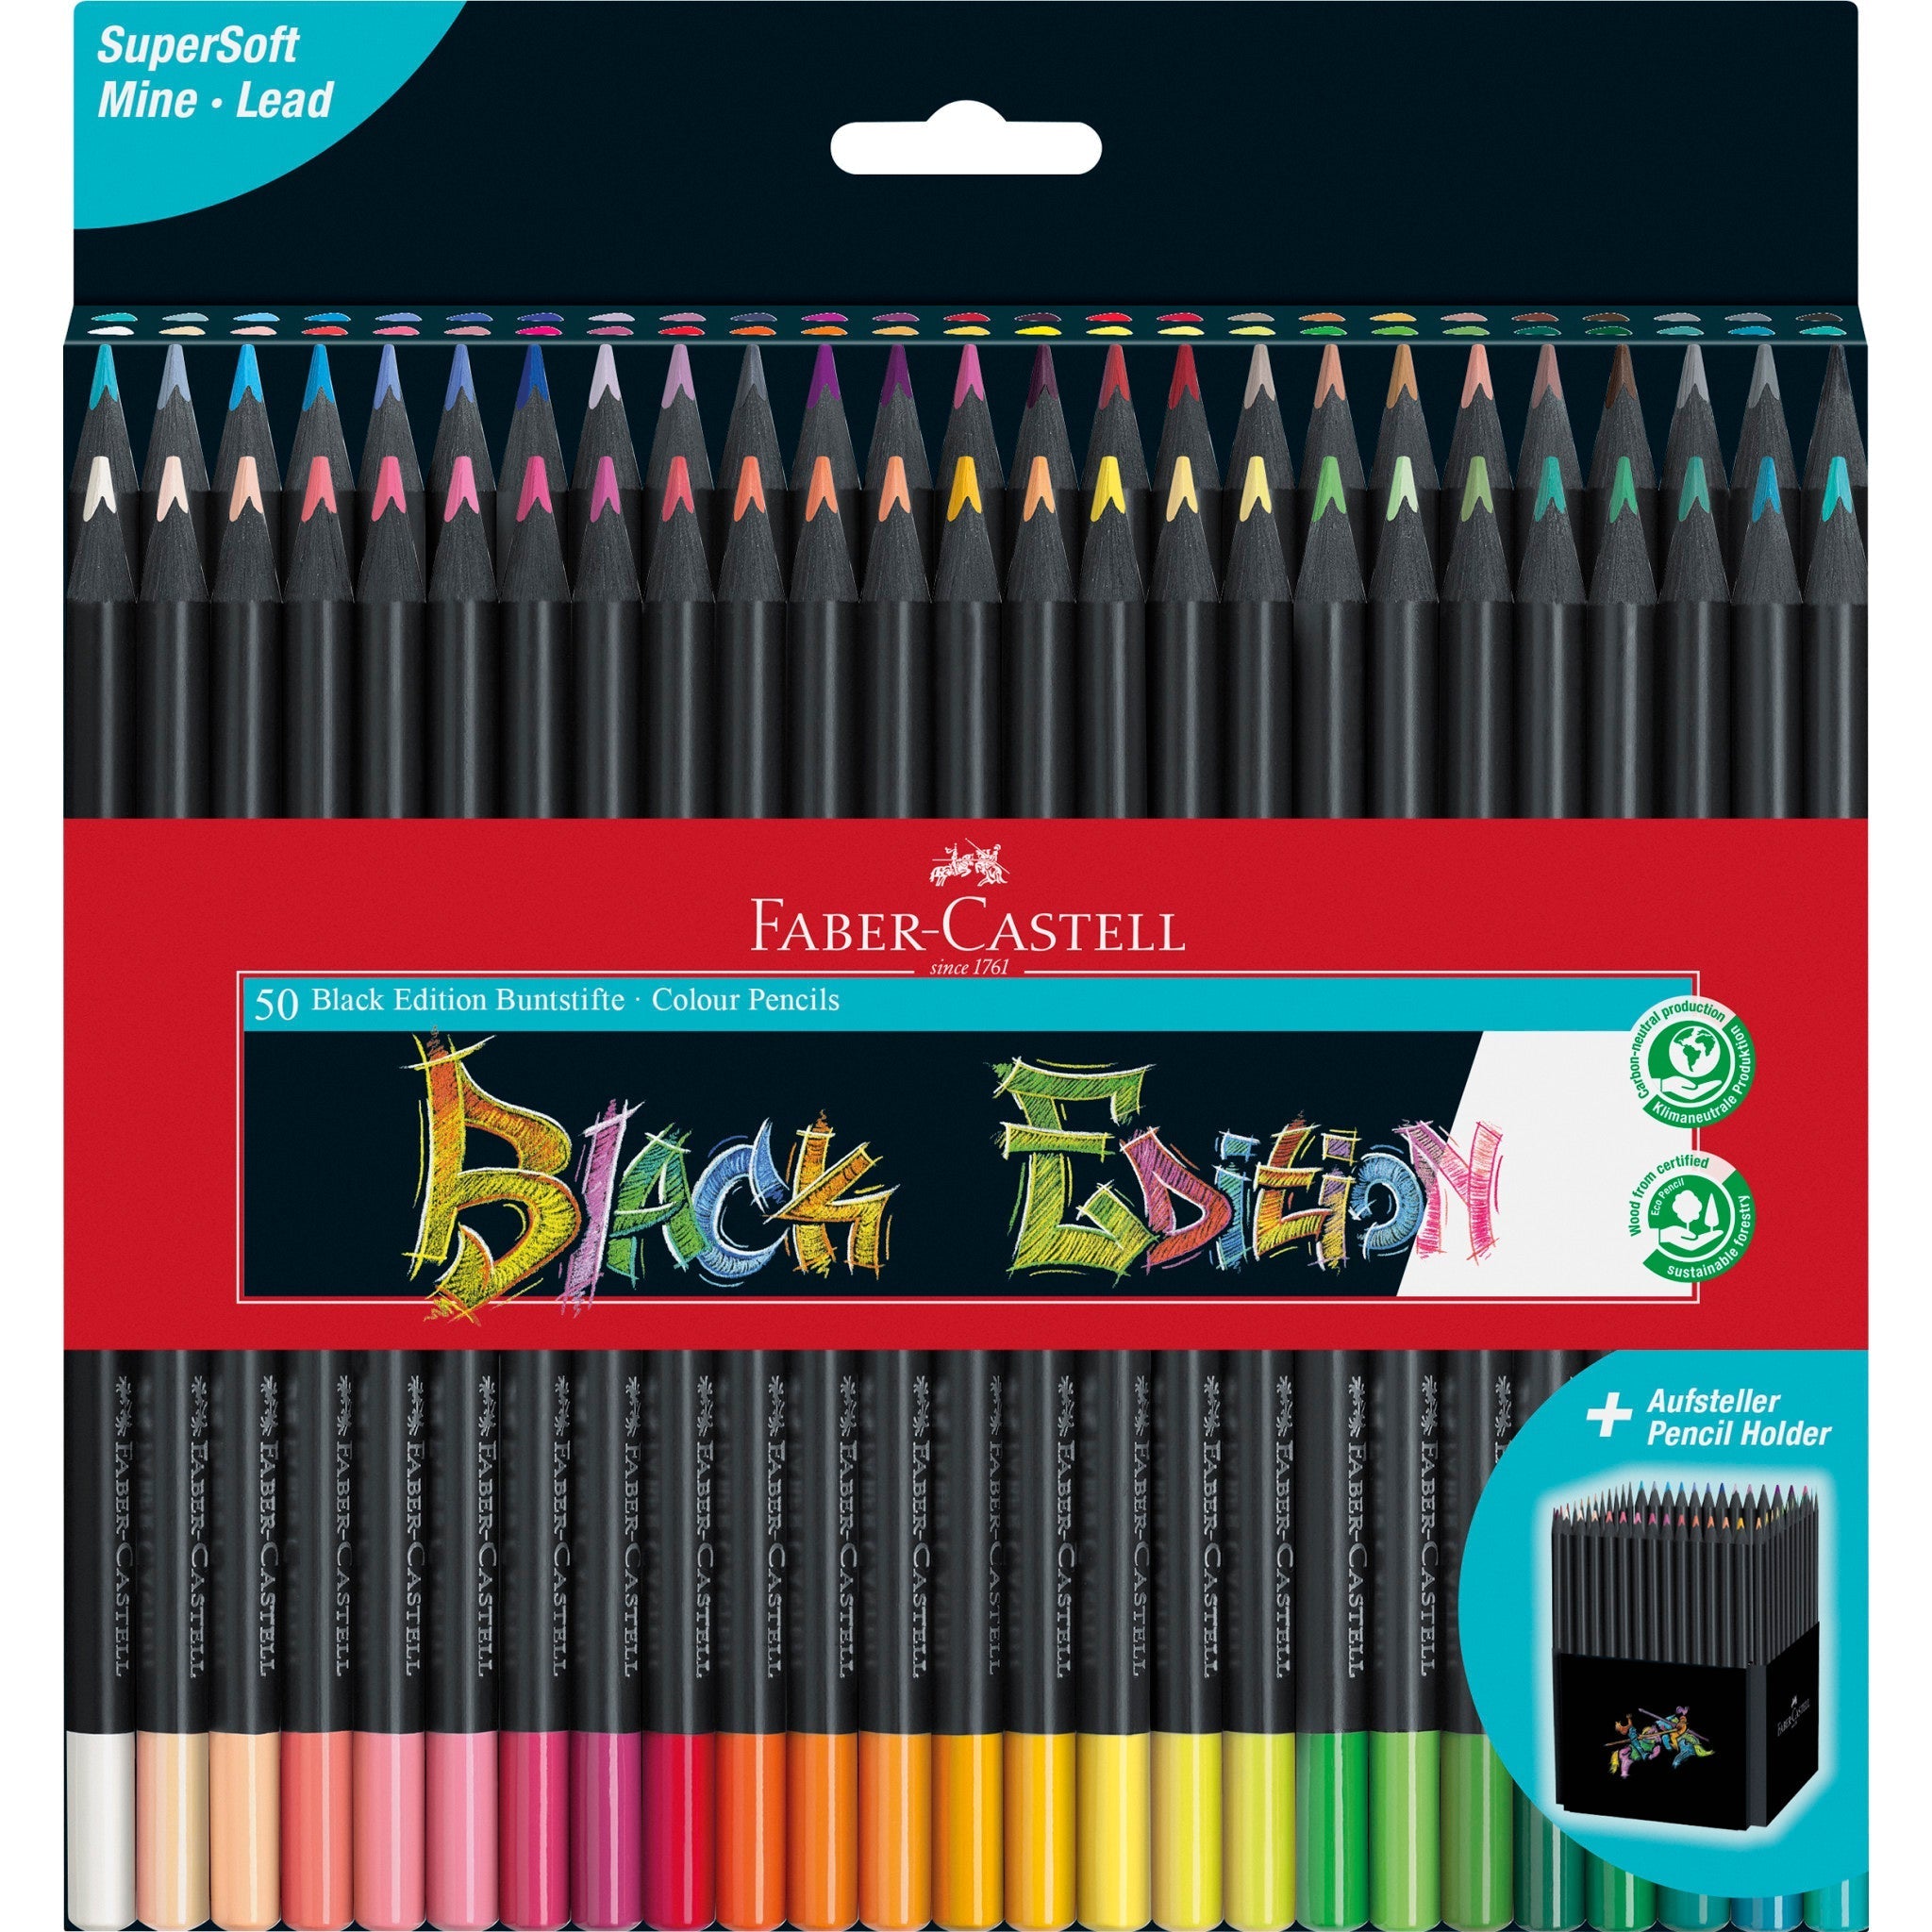 Faber-Castell Stylus Pencil Set - B Pencil with eraser + stylus